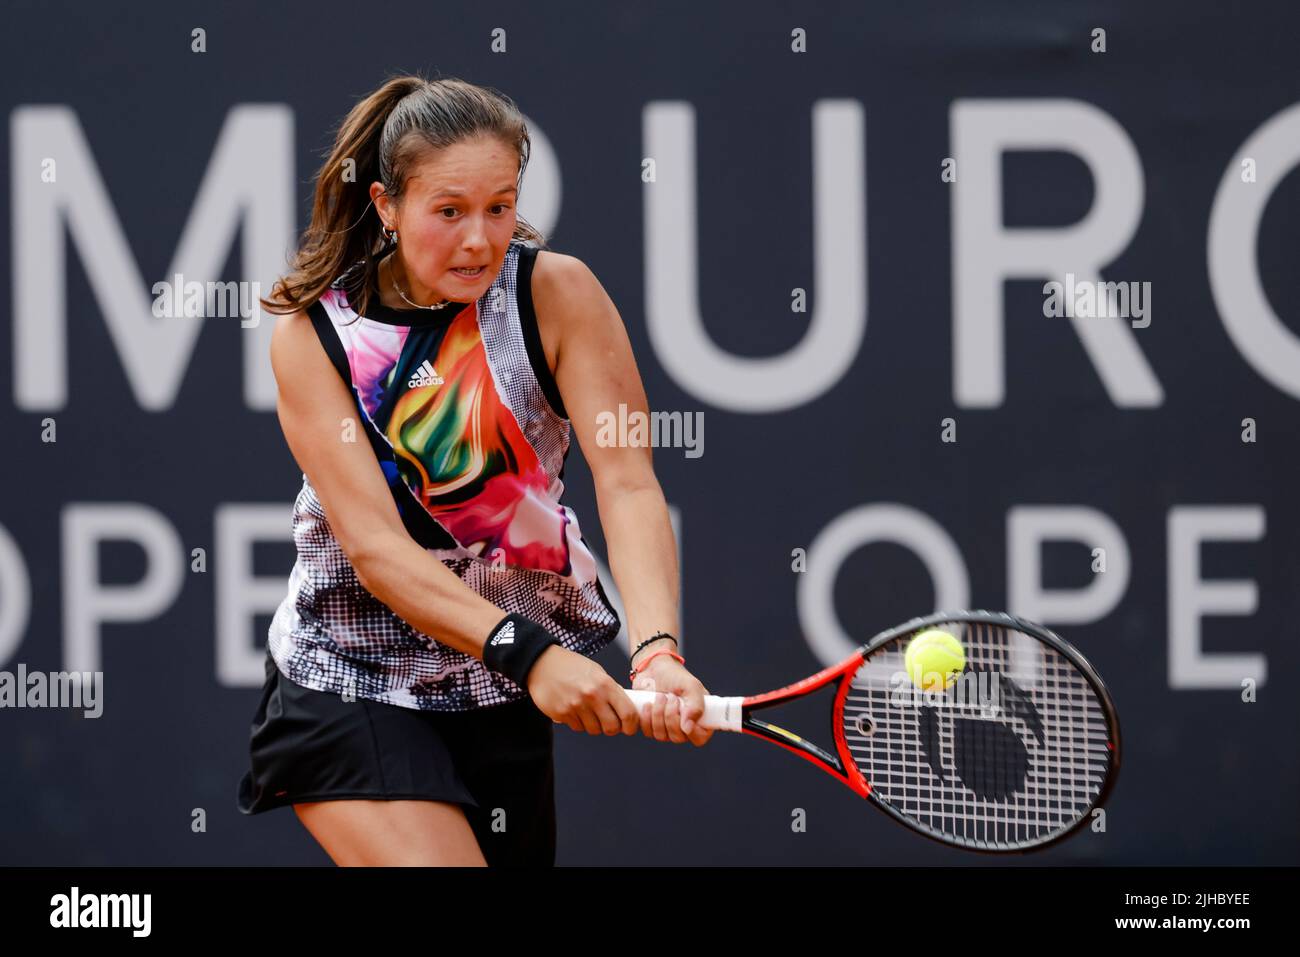 Hamburg, Germany. 17th July, 2022. Tennis, WTA Tour/ATP Tour, singles, women, 1st round. Siniakova (Czech Republic) - Kassatkina (Russia). Darya Kassatkina in action. Credit: Frank Molter/dpa/Alamy Live News Stock Photo